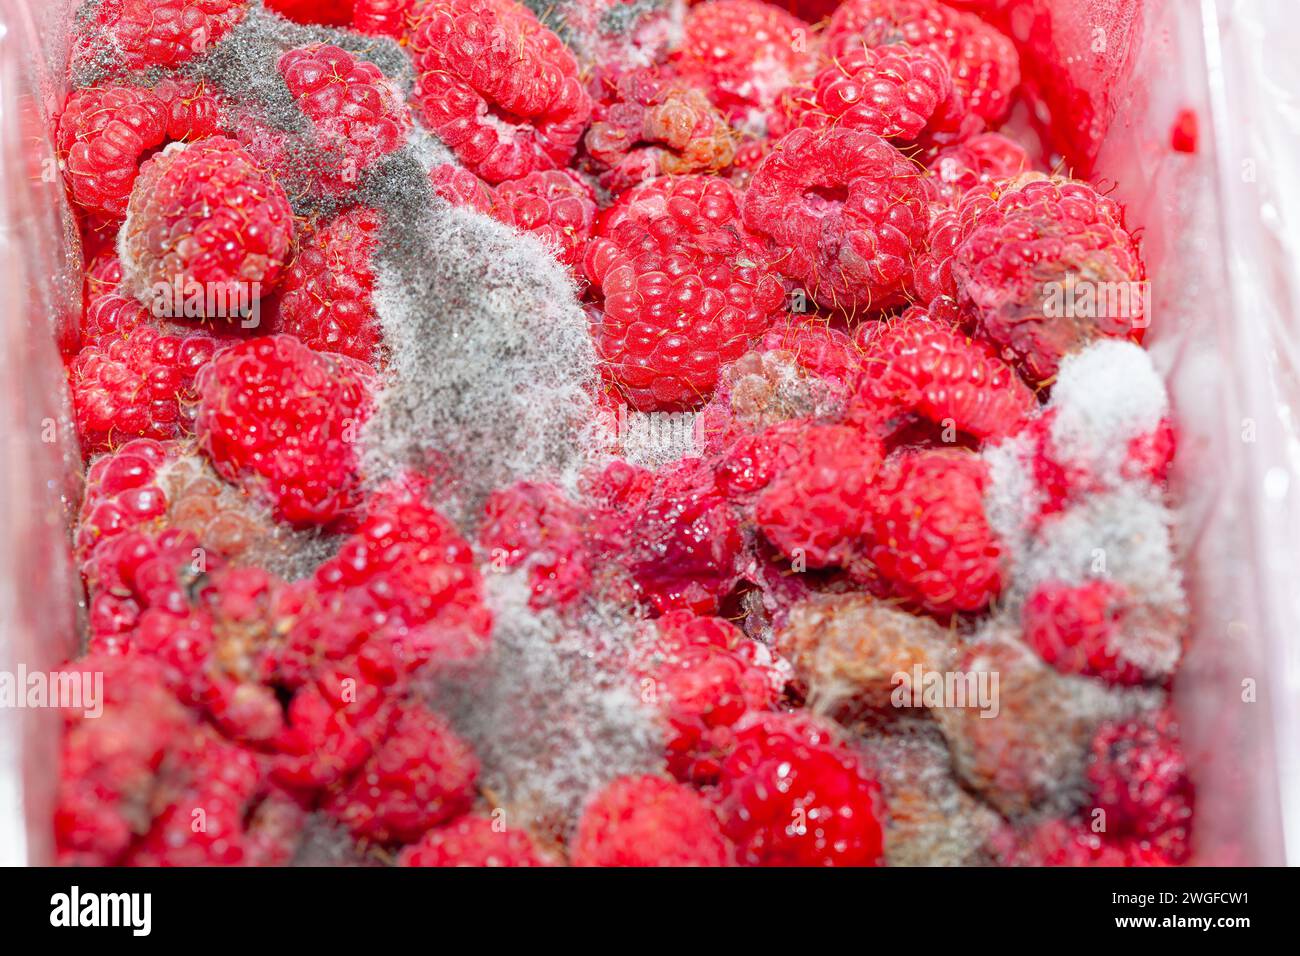 Raspberries with mold macro background, selective focus Stock Photo